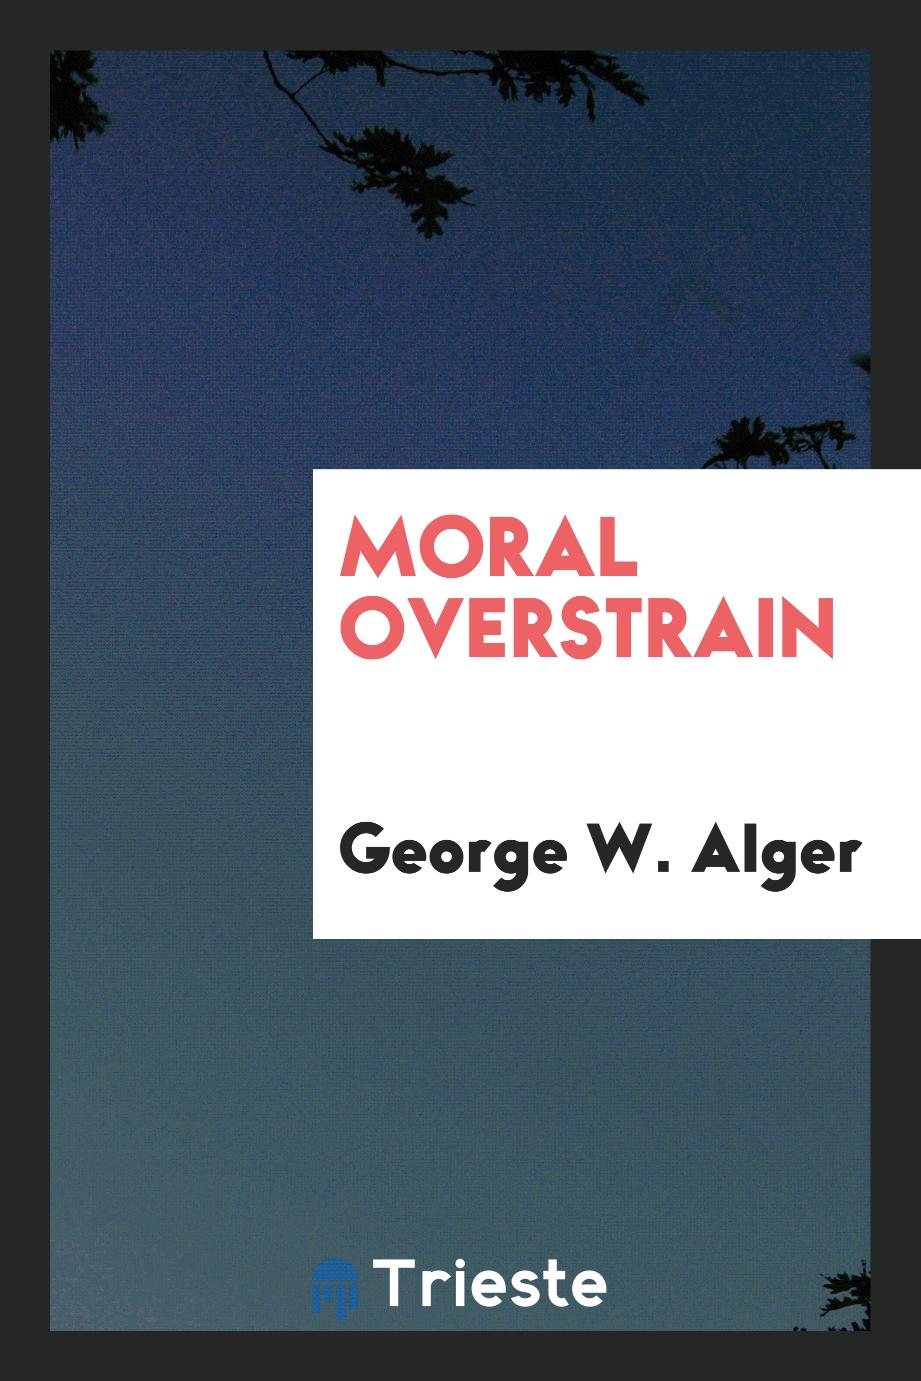 Moral overstrain